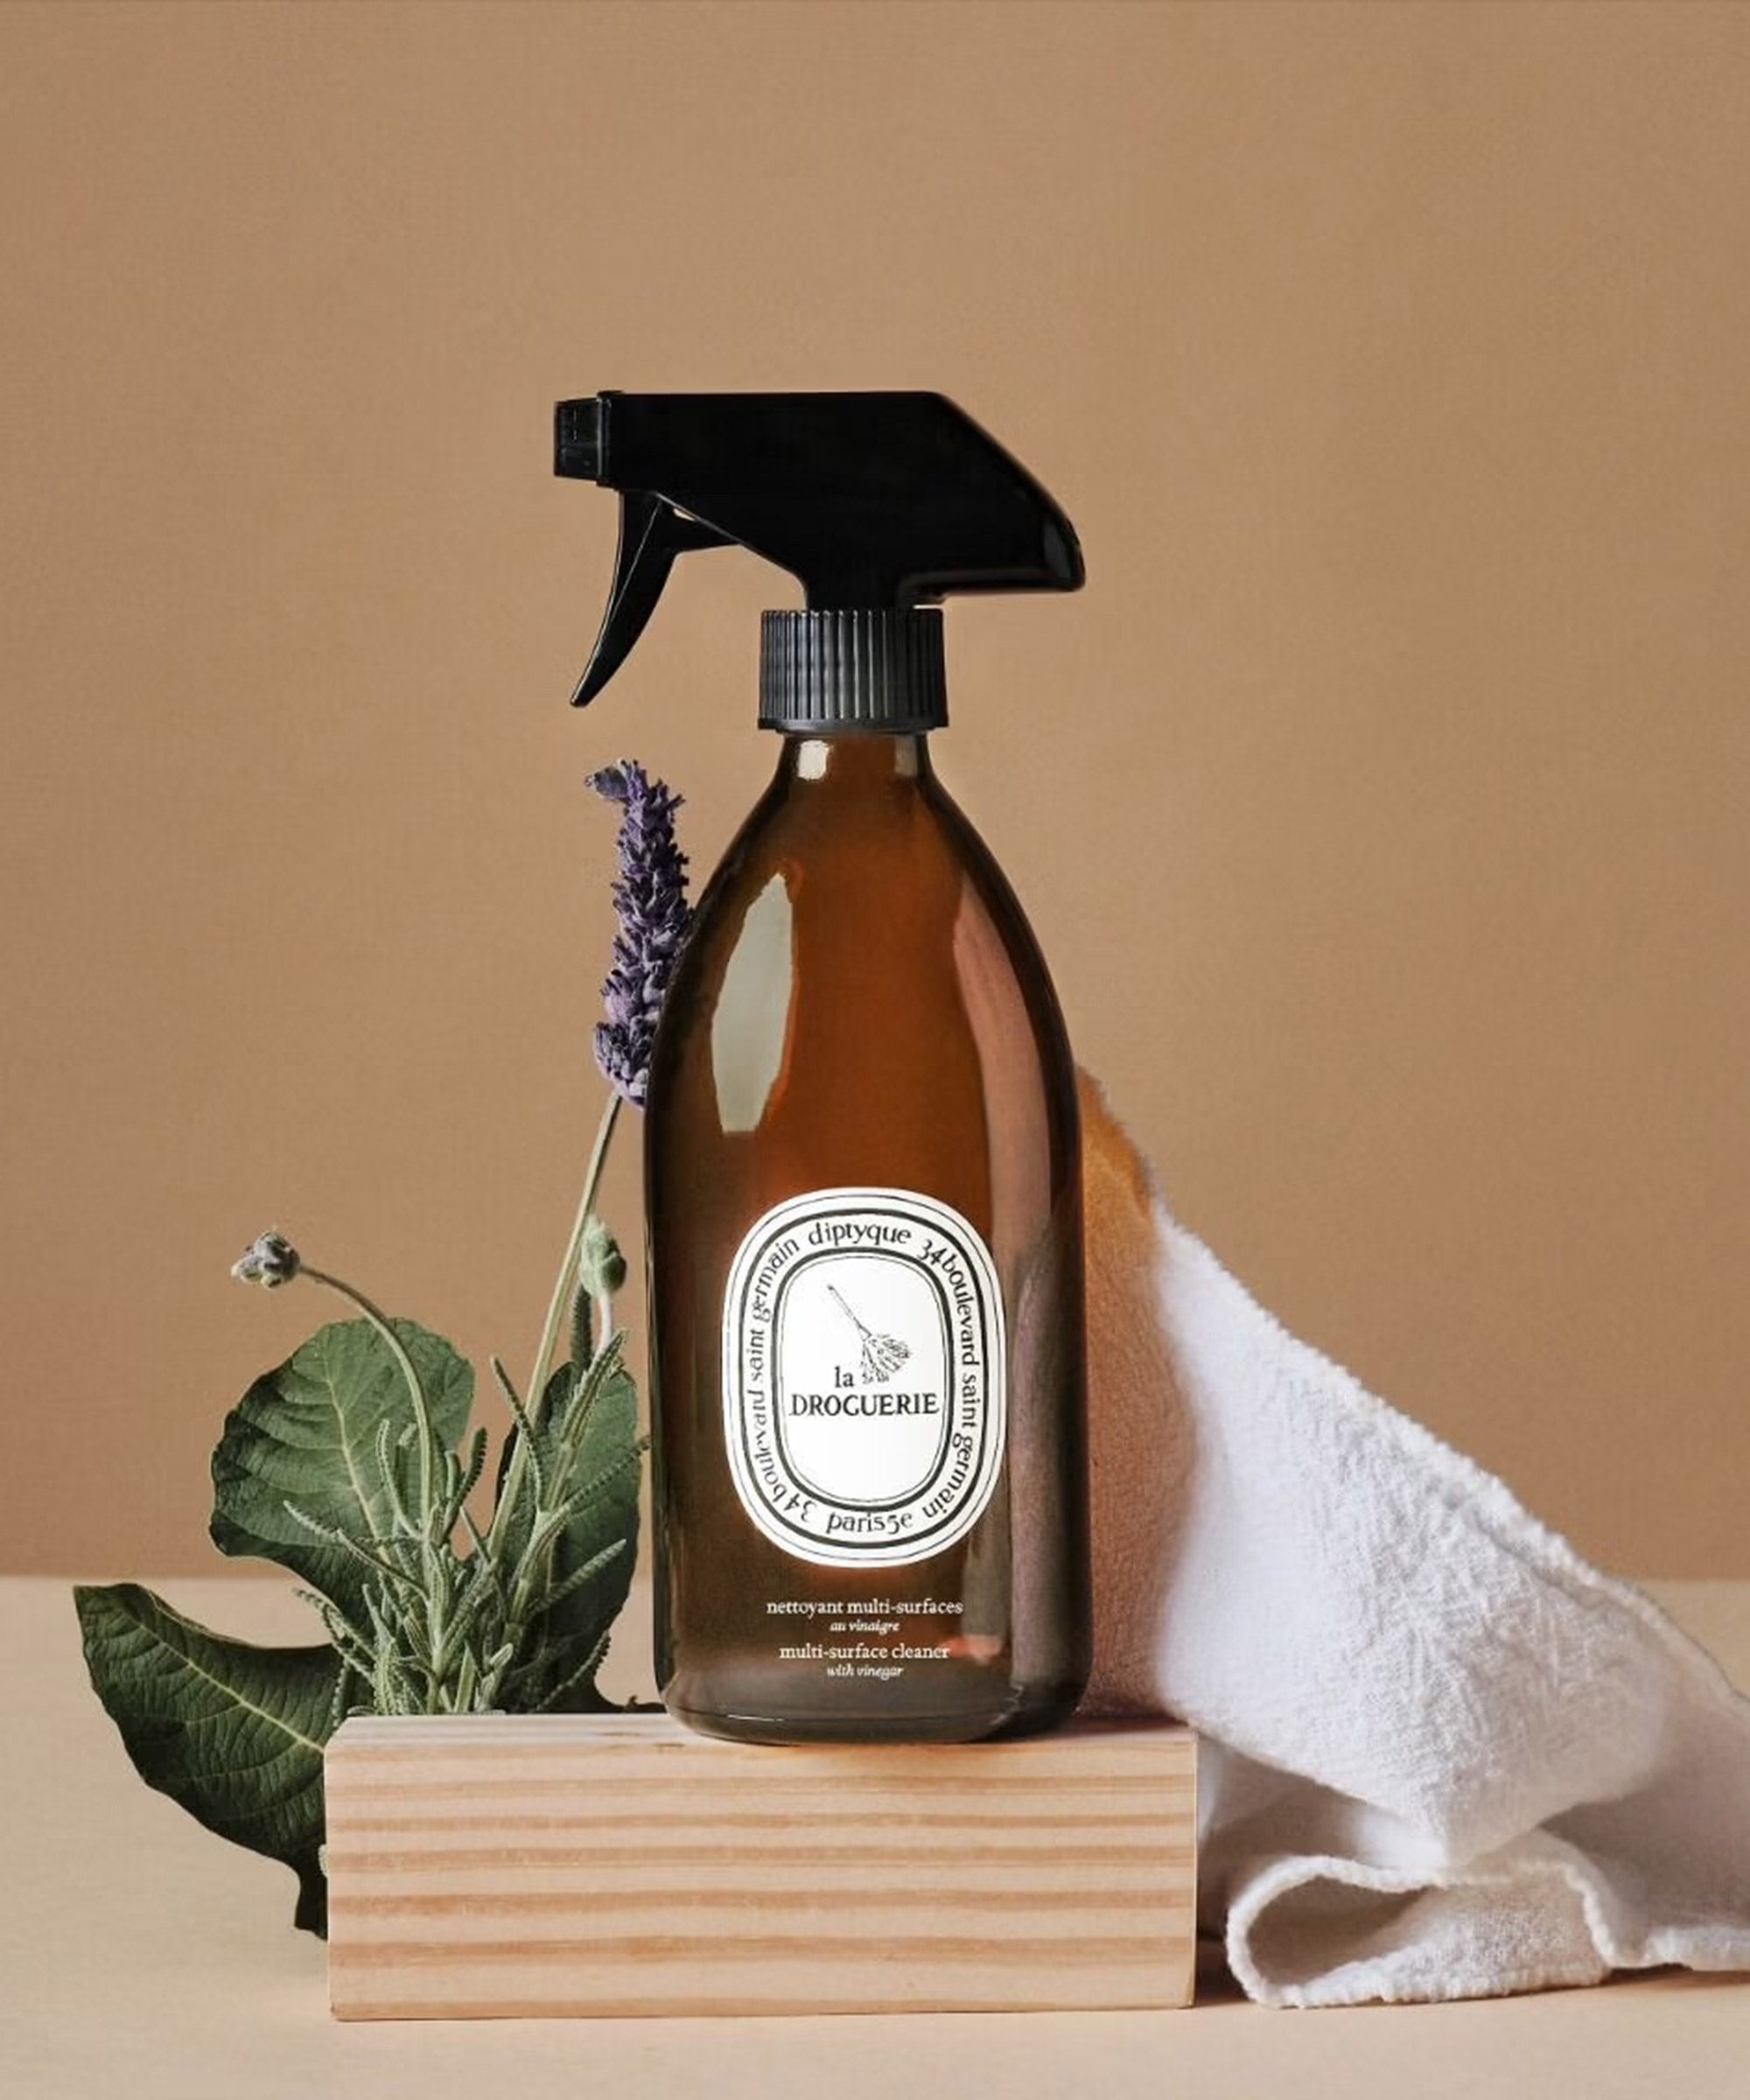 Car Perfume Gold Fragrance Air Freshener Luxury Odor Eliminator Spray  Absorber 5